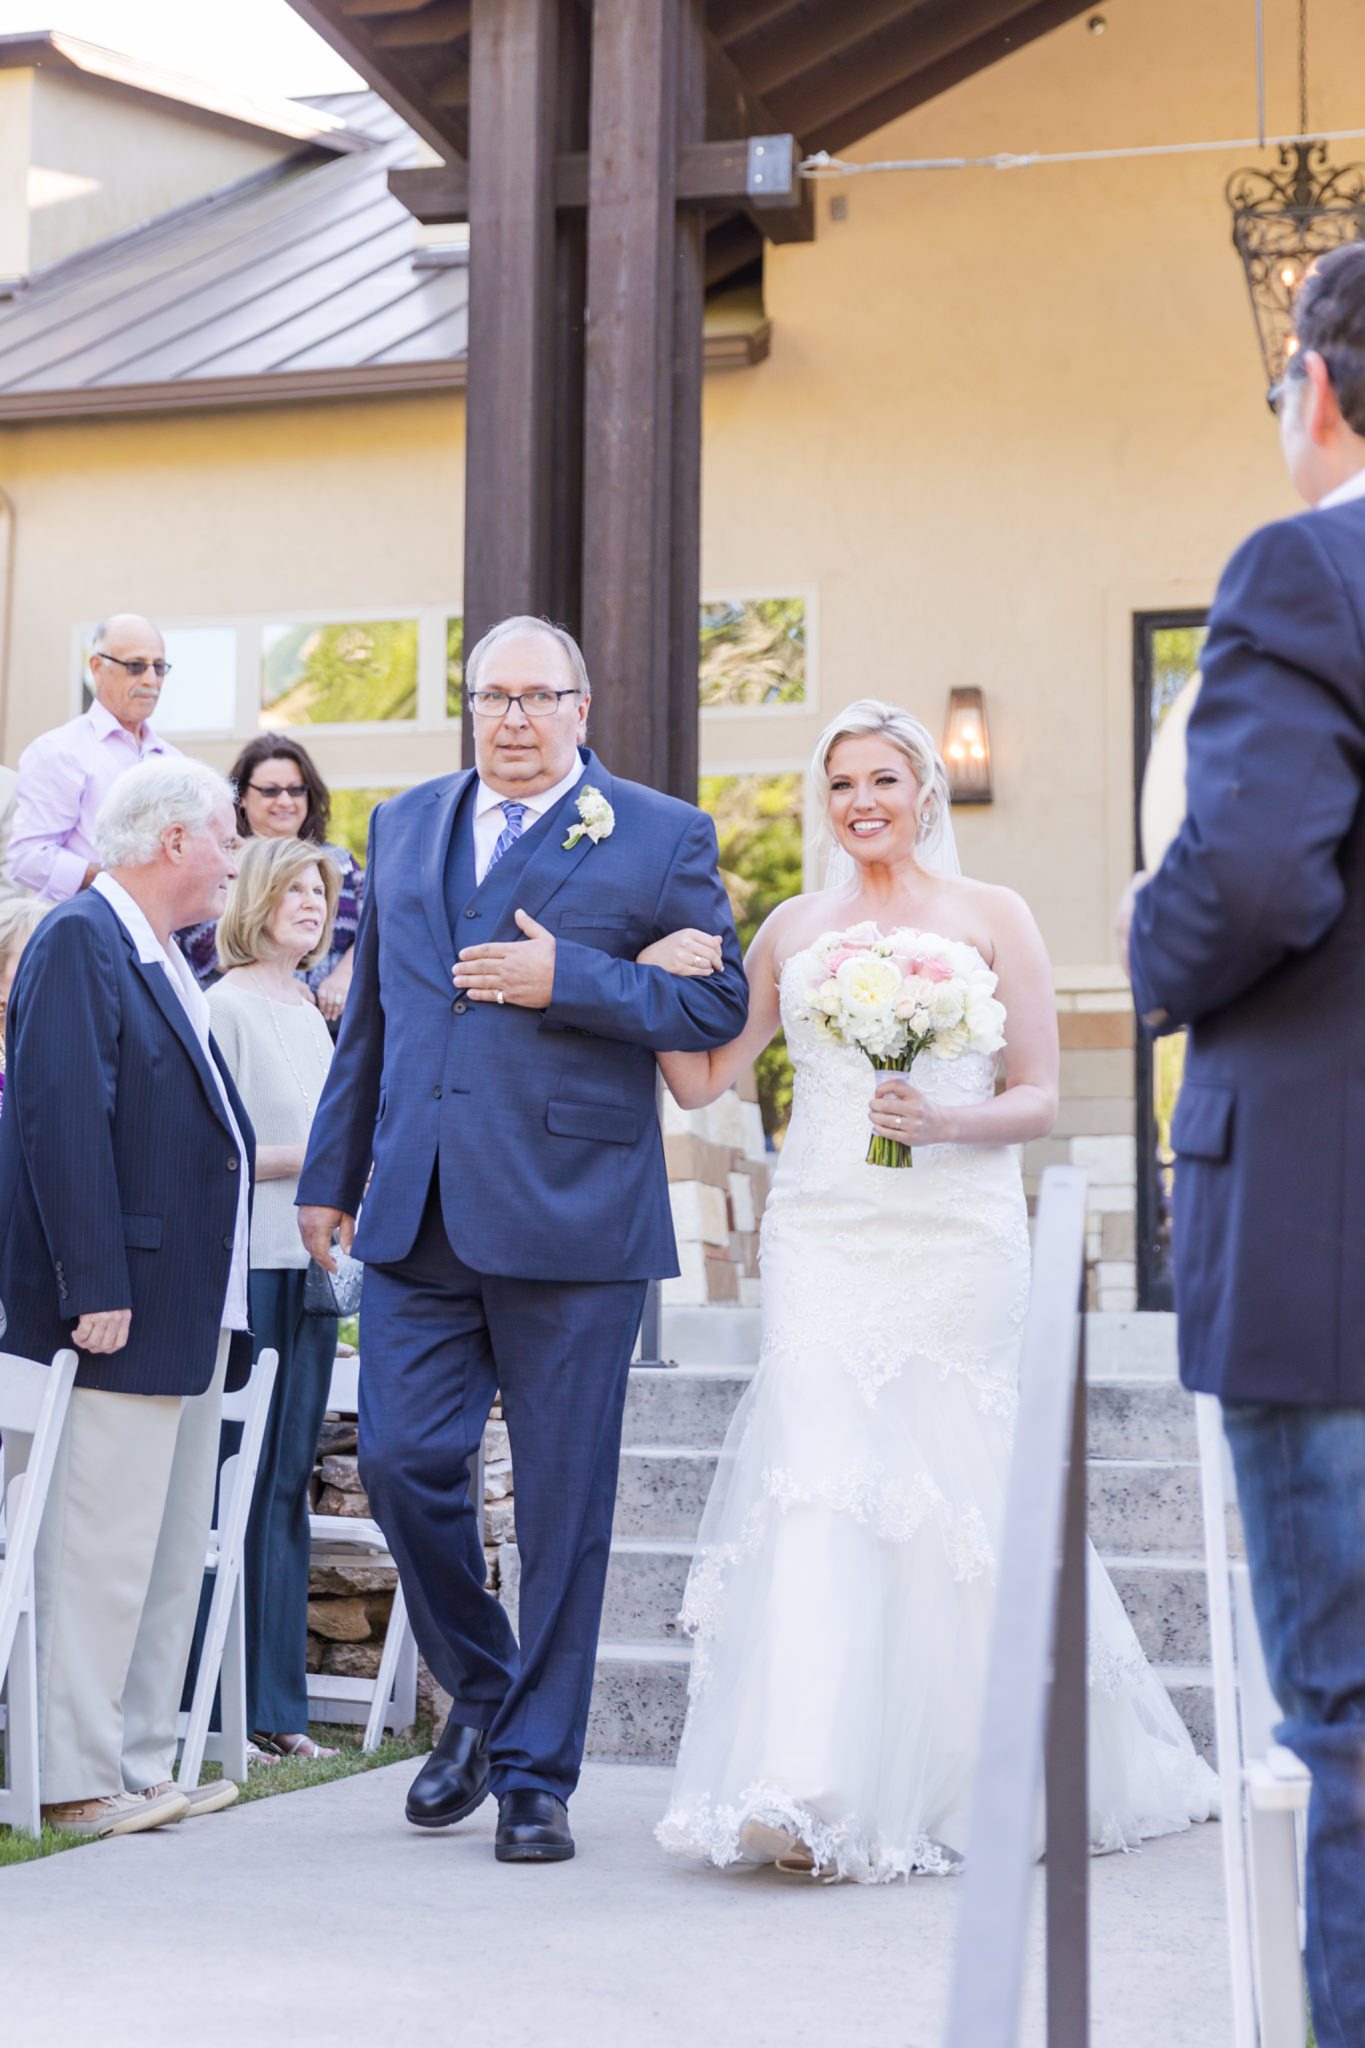 A Classic Rose Gold and Blush Wedding at Remi's Ridge at Hidden Falls in Spring Branch, TX by Dawn Elizabeth Studios, San Antonio Wedding Photographer